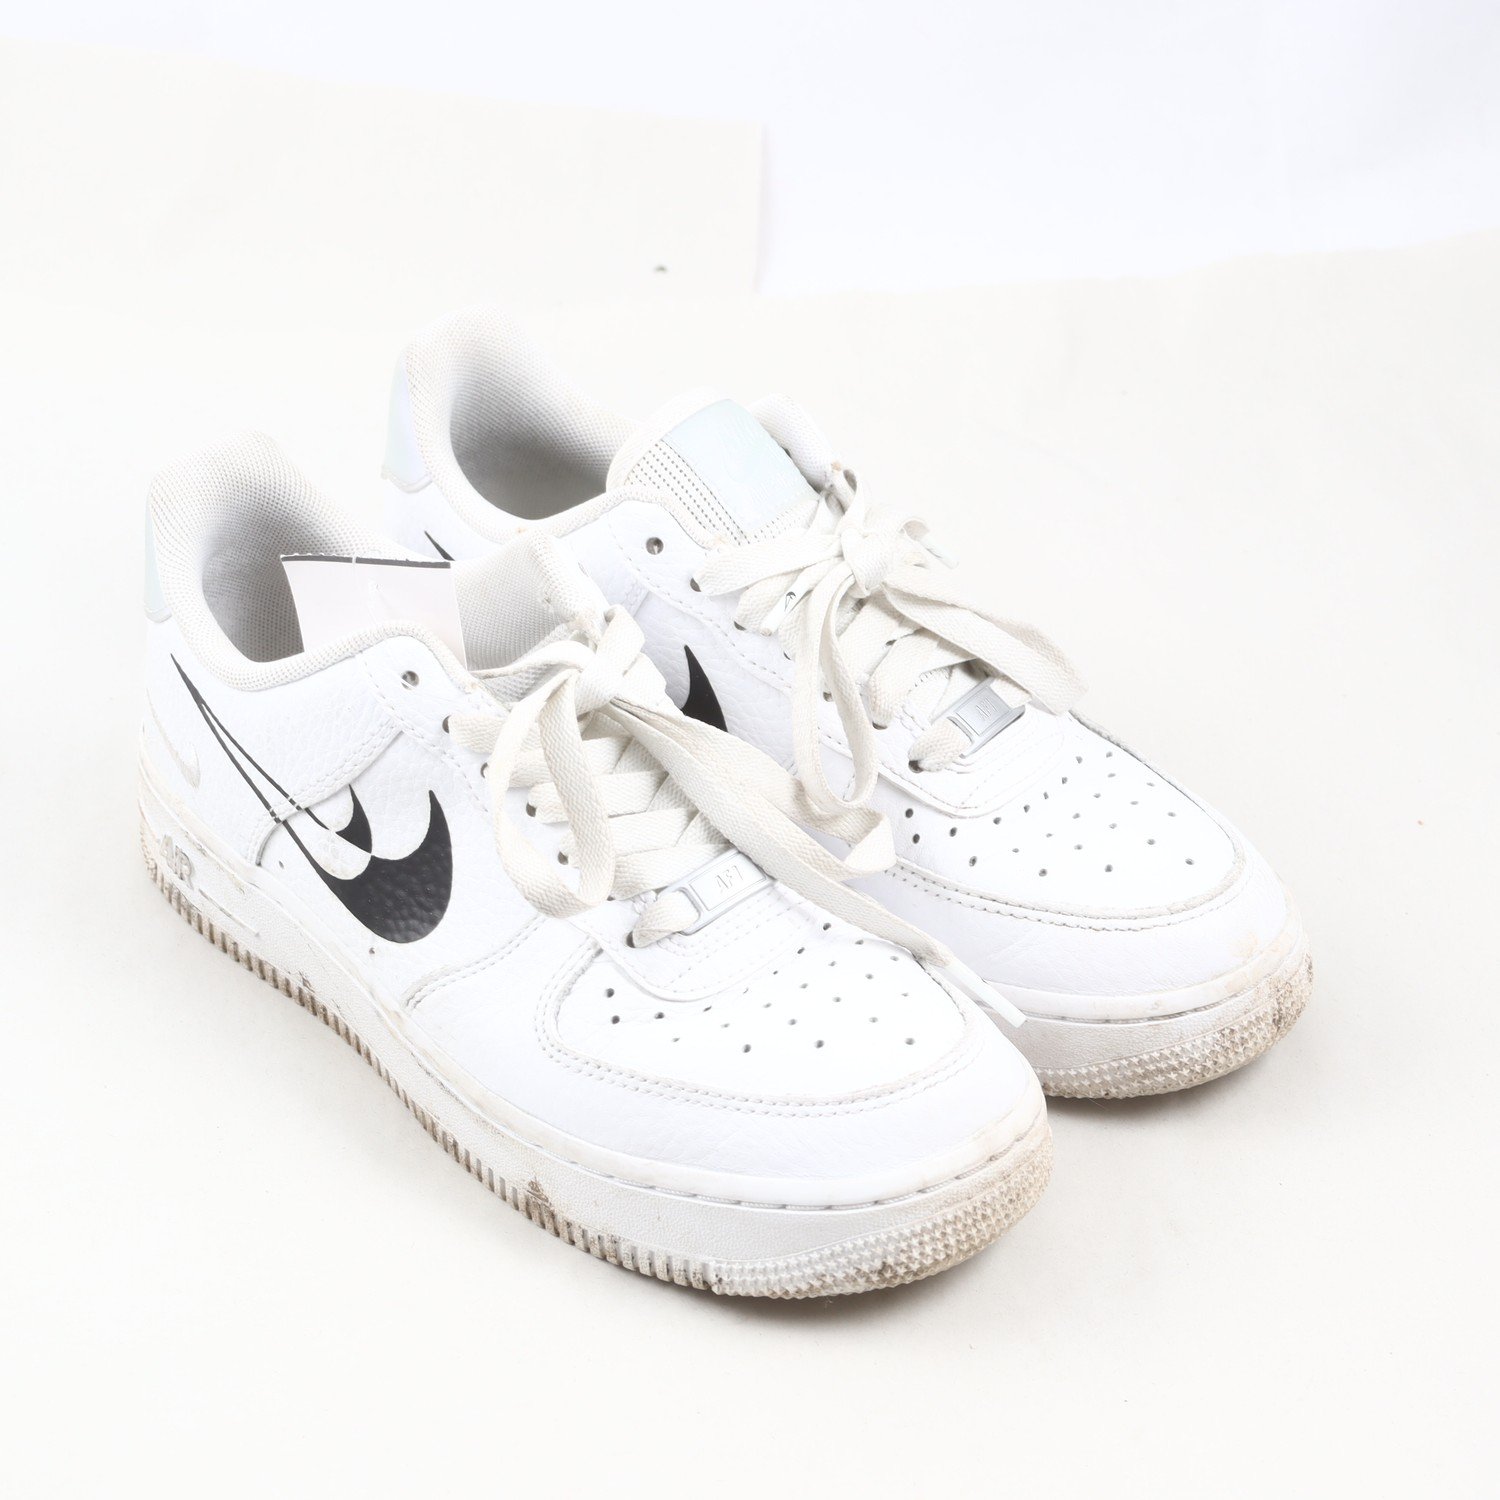 Sneakers, Nike Air Force, vit, stl. 36